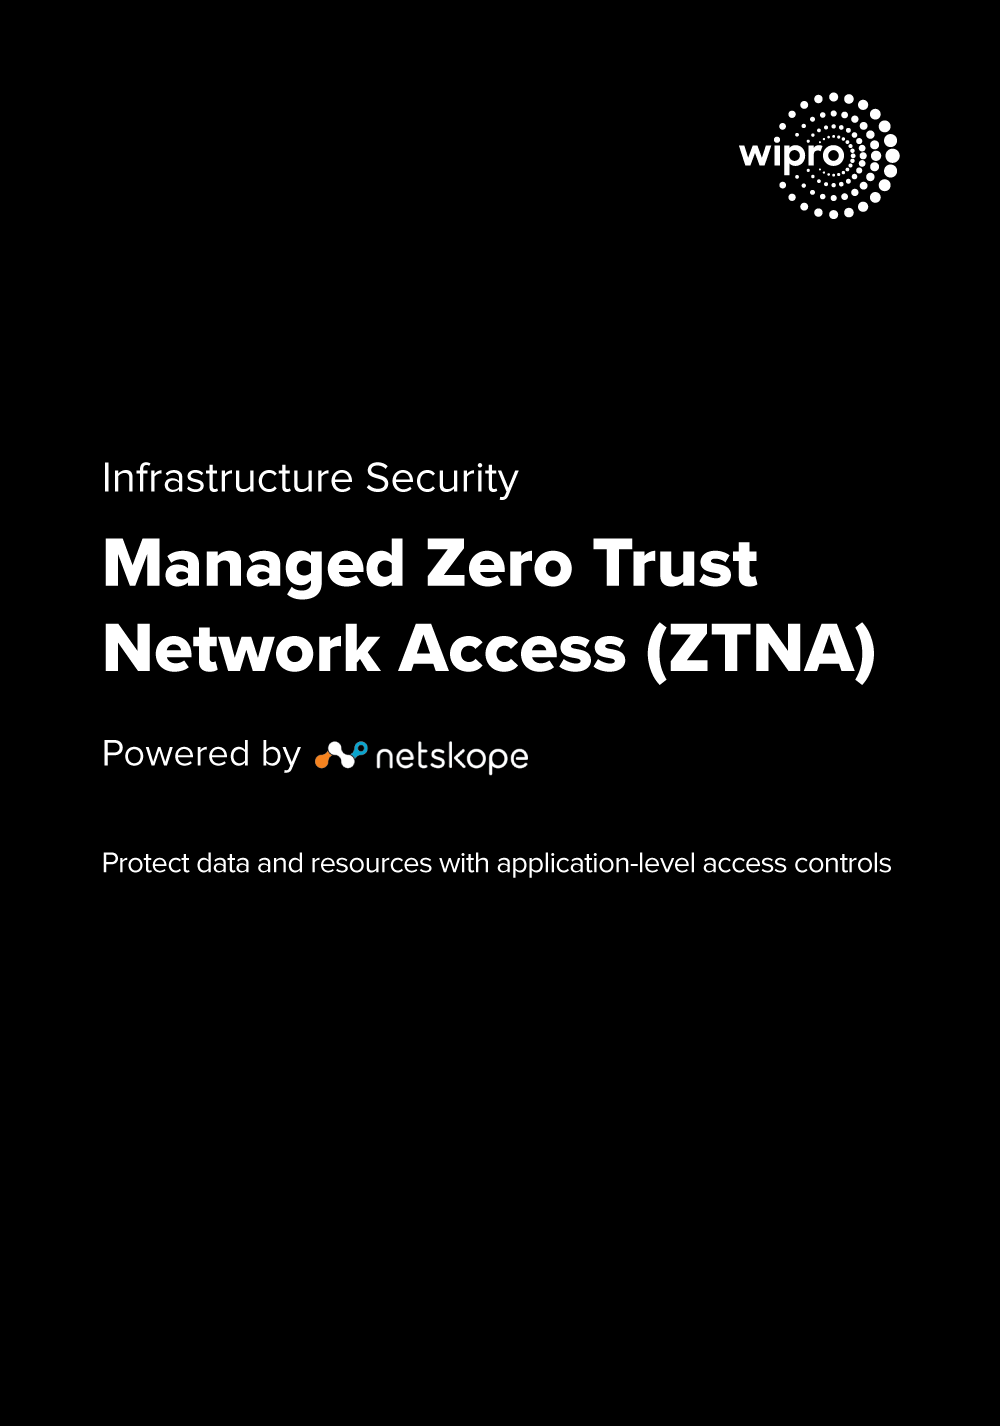 Wipro’s Managed Zero Trust Network Access (ZTNA)